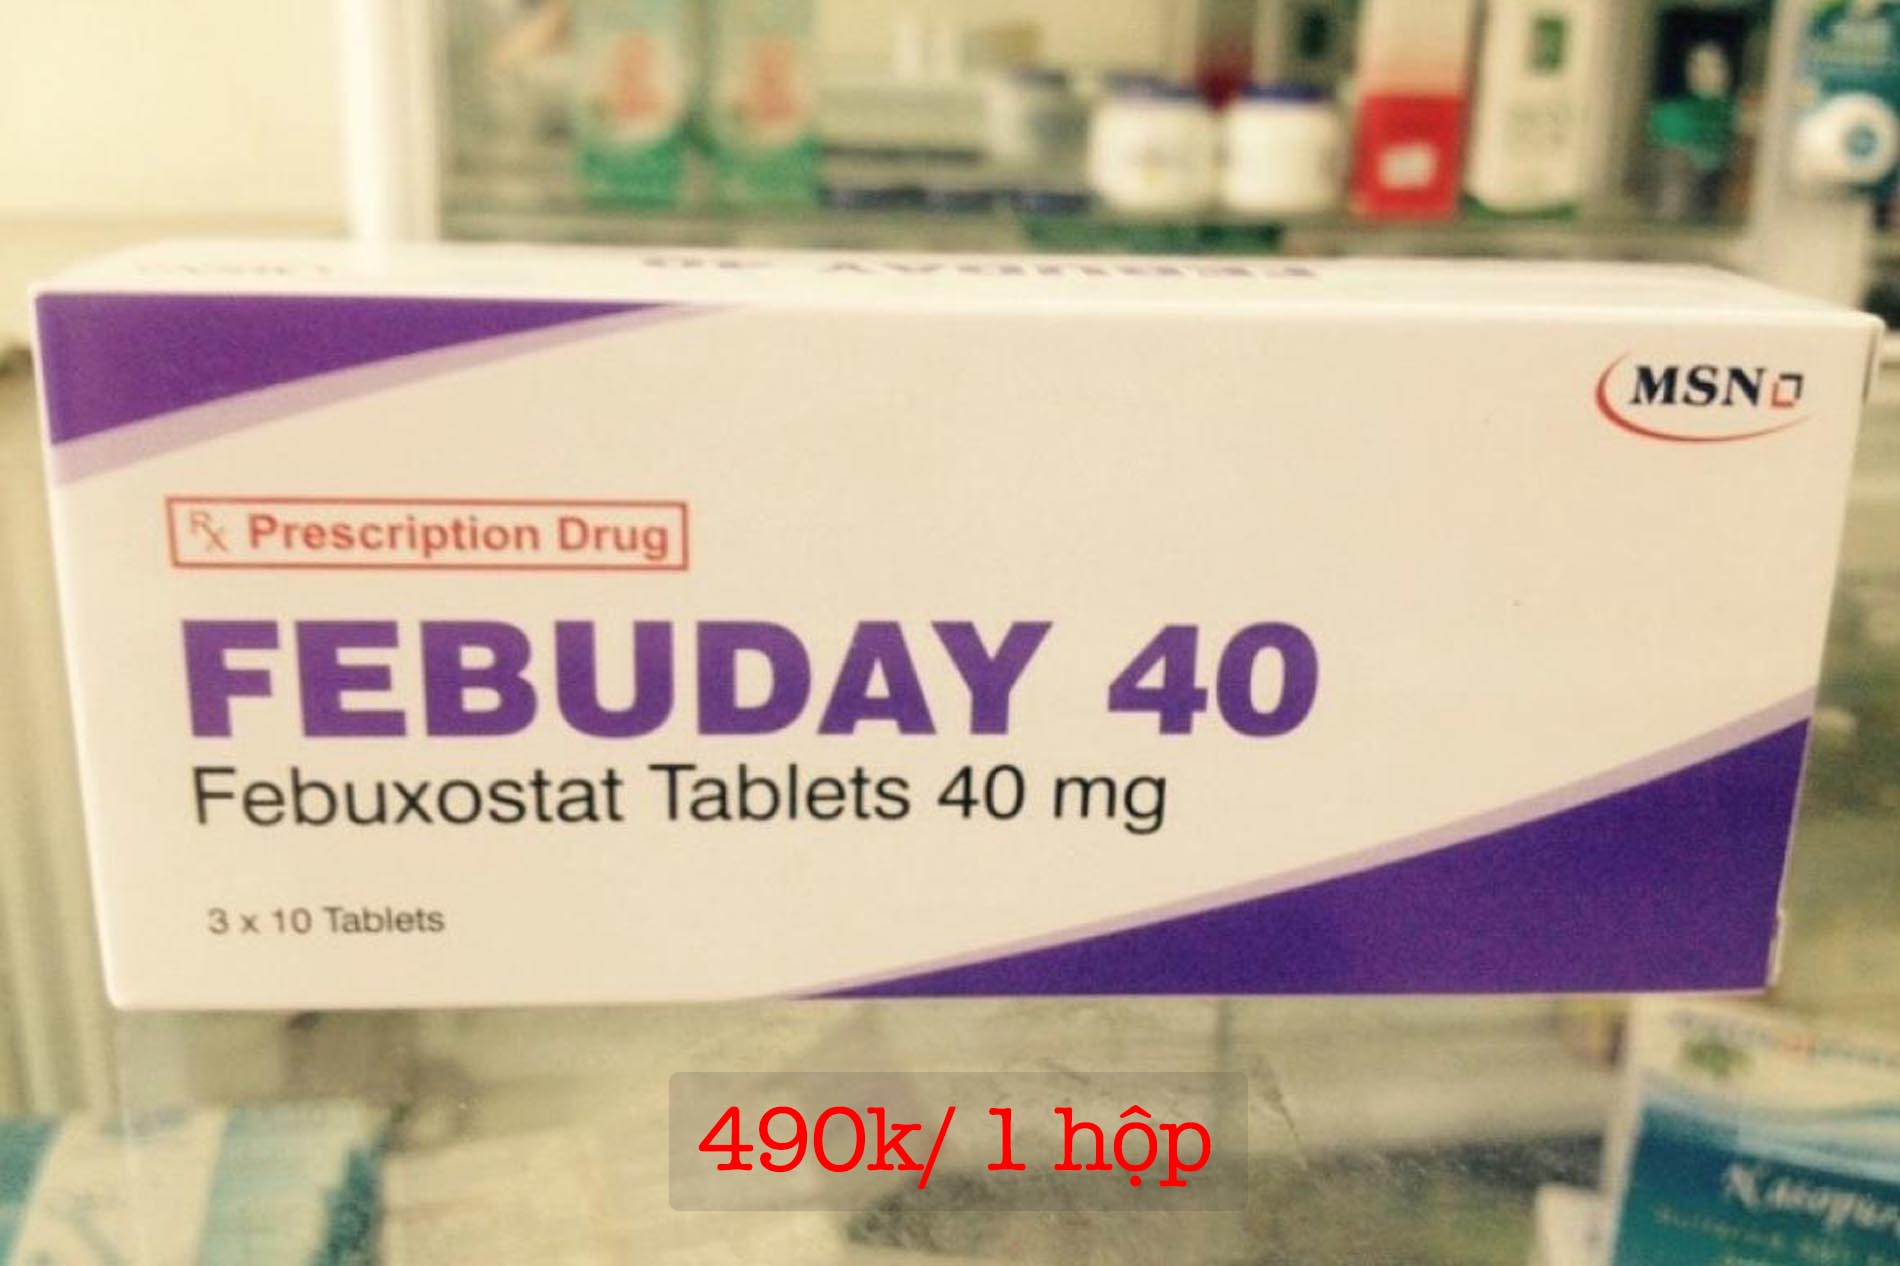 Giá bán của thuốc Febuday